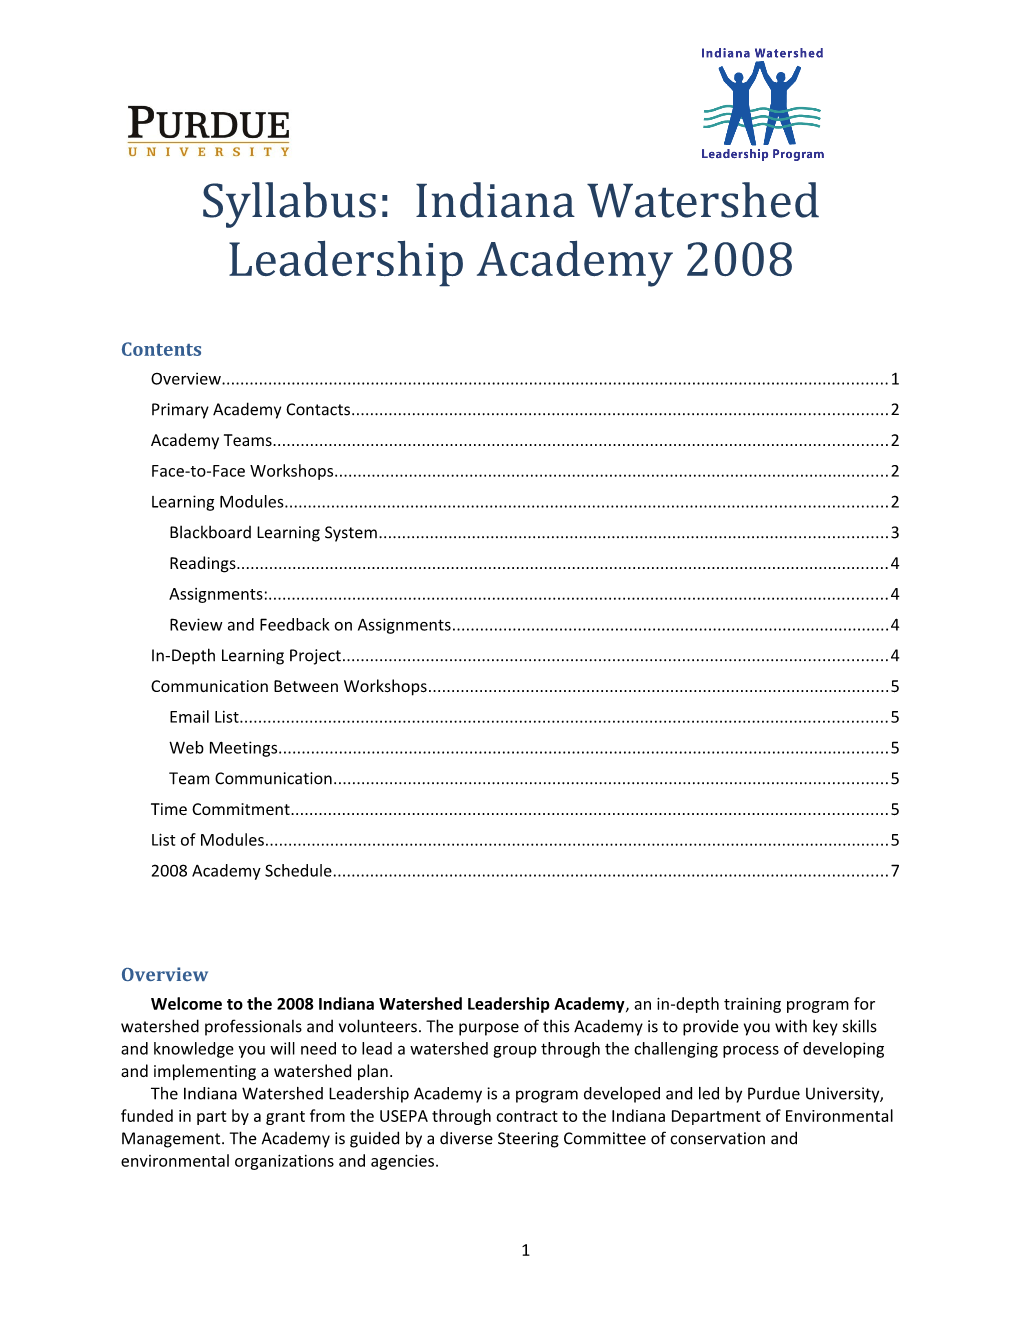 Syllabus: Indiana Watershed Leadership Academy 2008